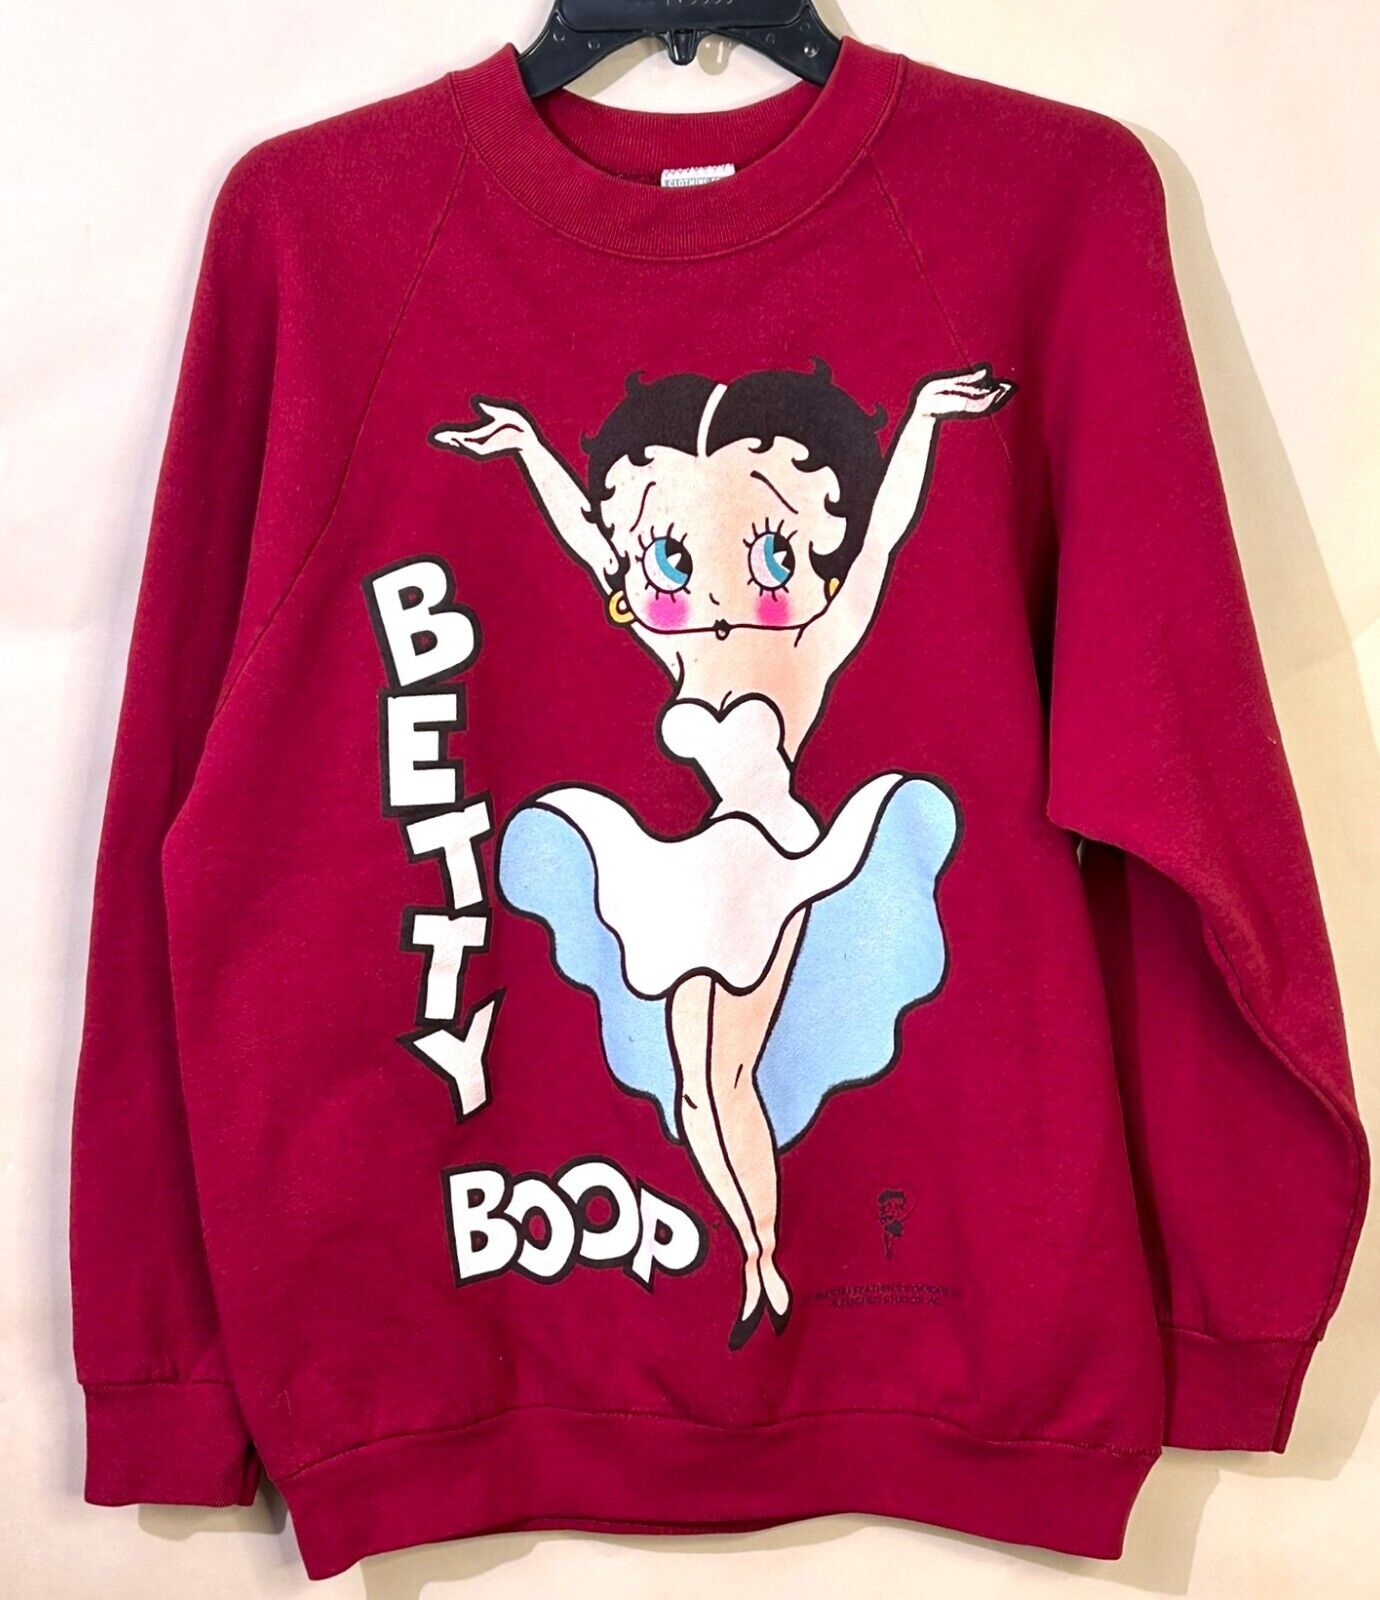 RARE Betty Boop Freeze USA Sweat Shirt 1993 Fleischer Large Plz Examine Photos